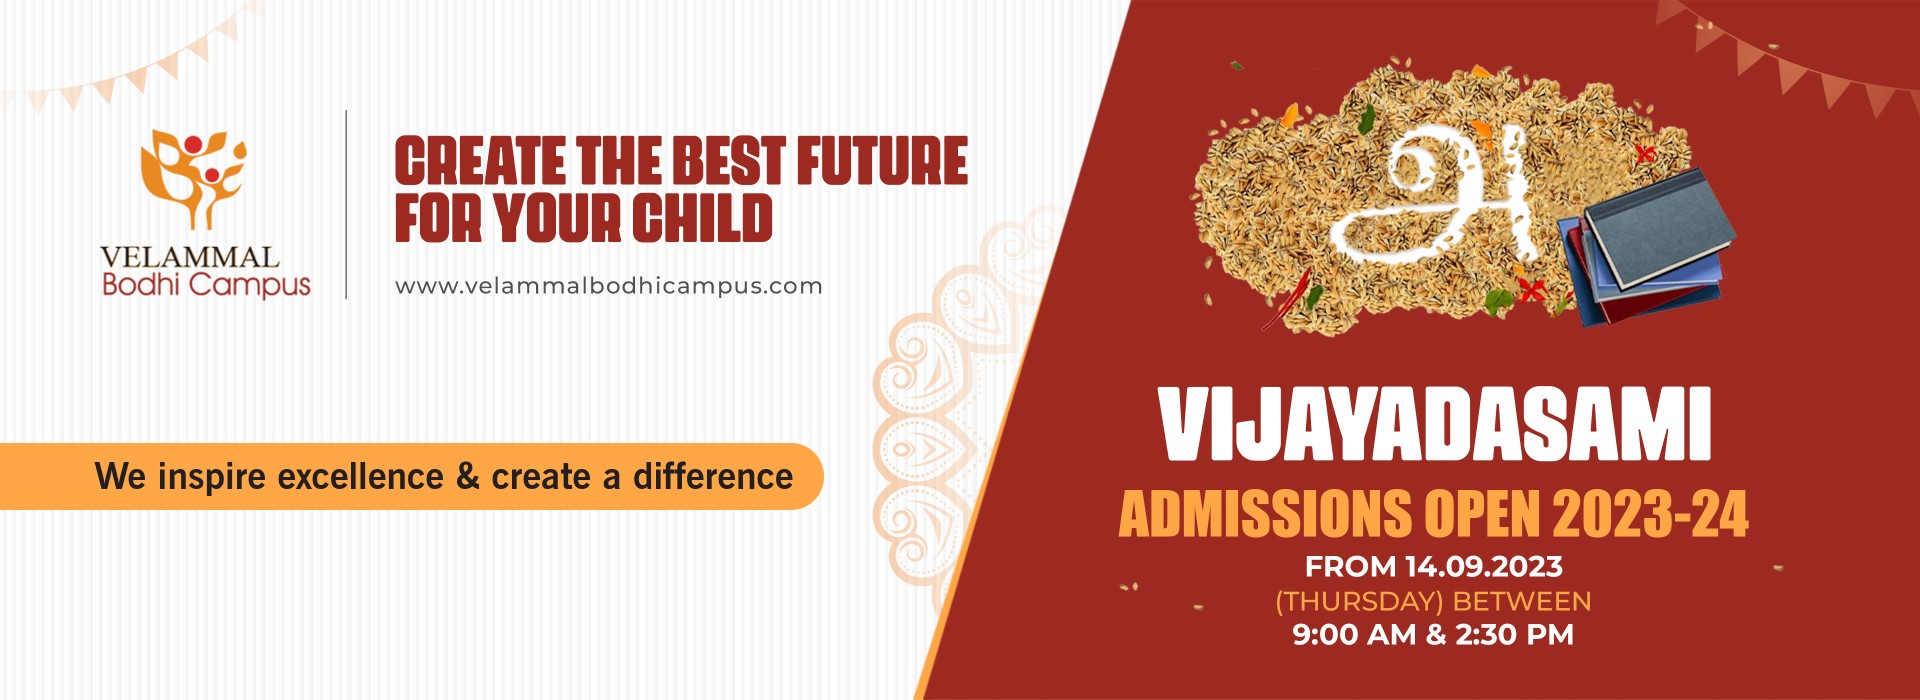 Velammal Vijayadasami Admission Open 2023-24